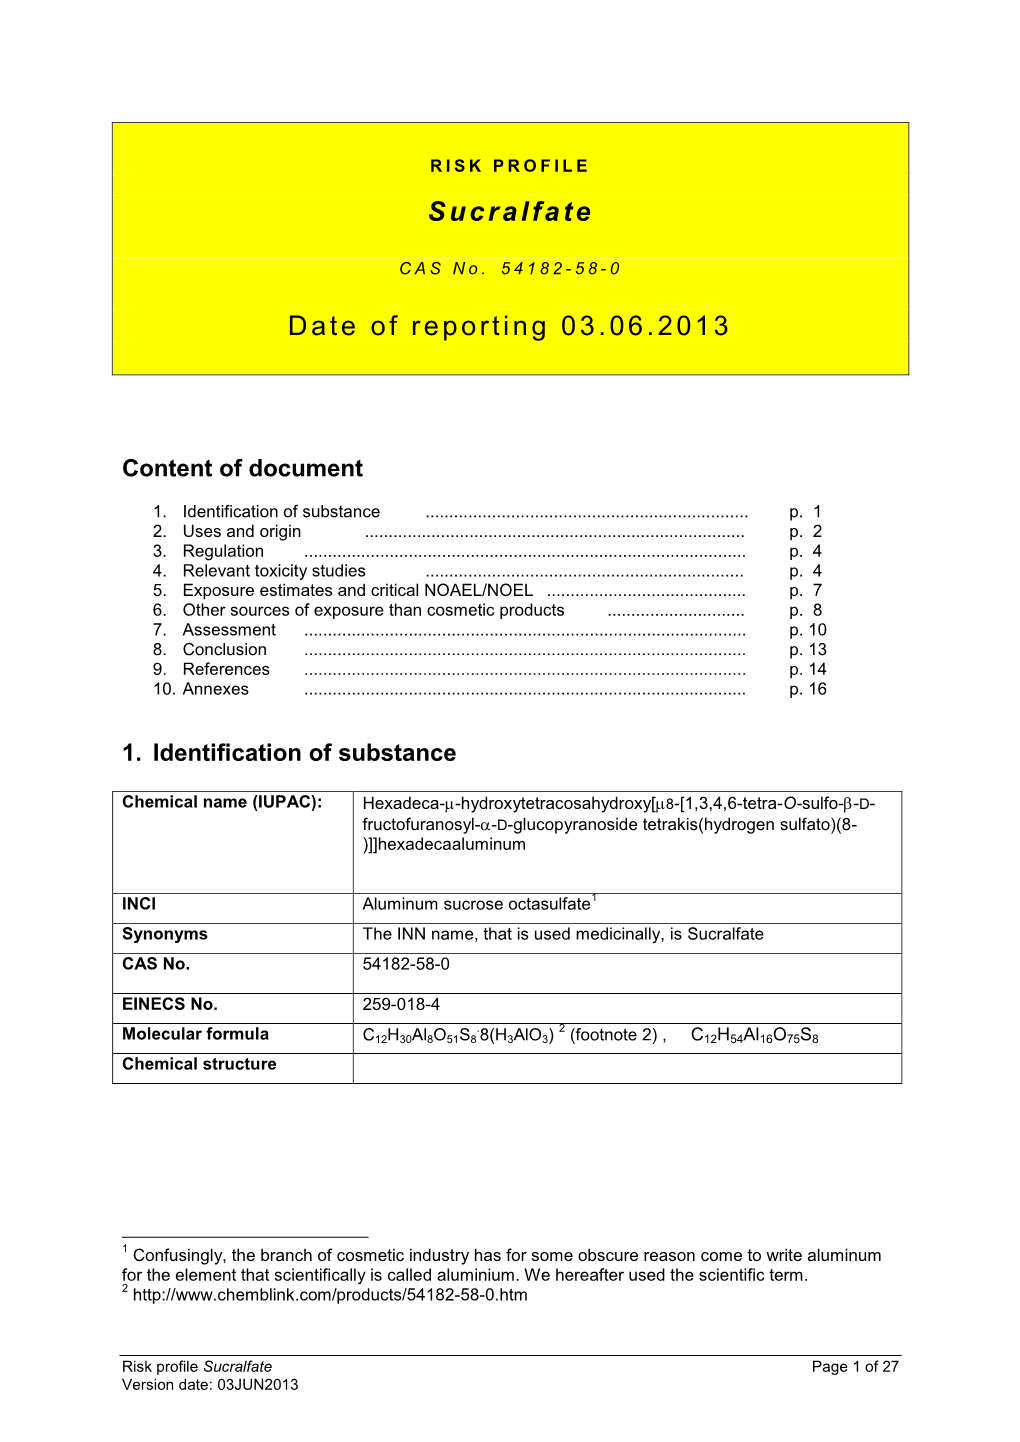 Risk Profile Sucralfate Page 1 of 27 Version Date: 03JUN2013